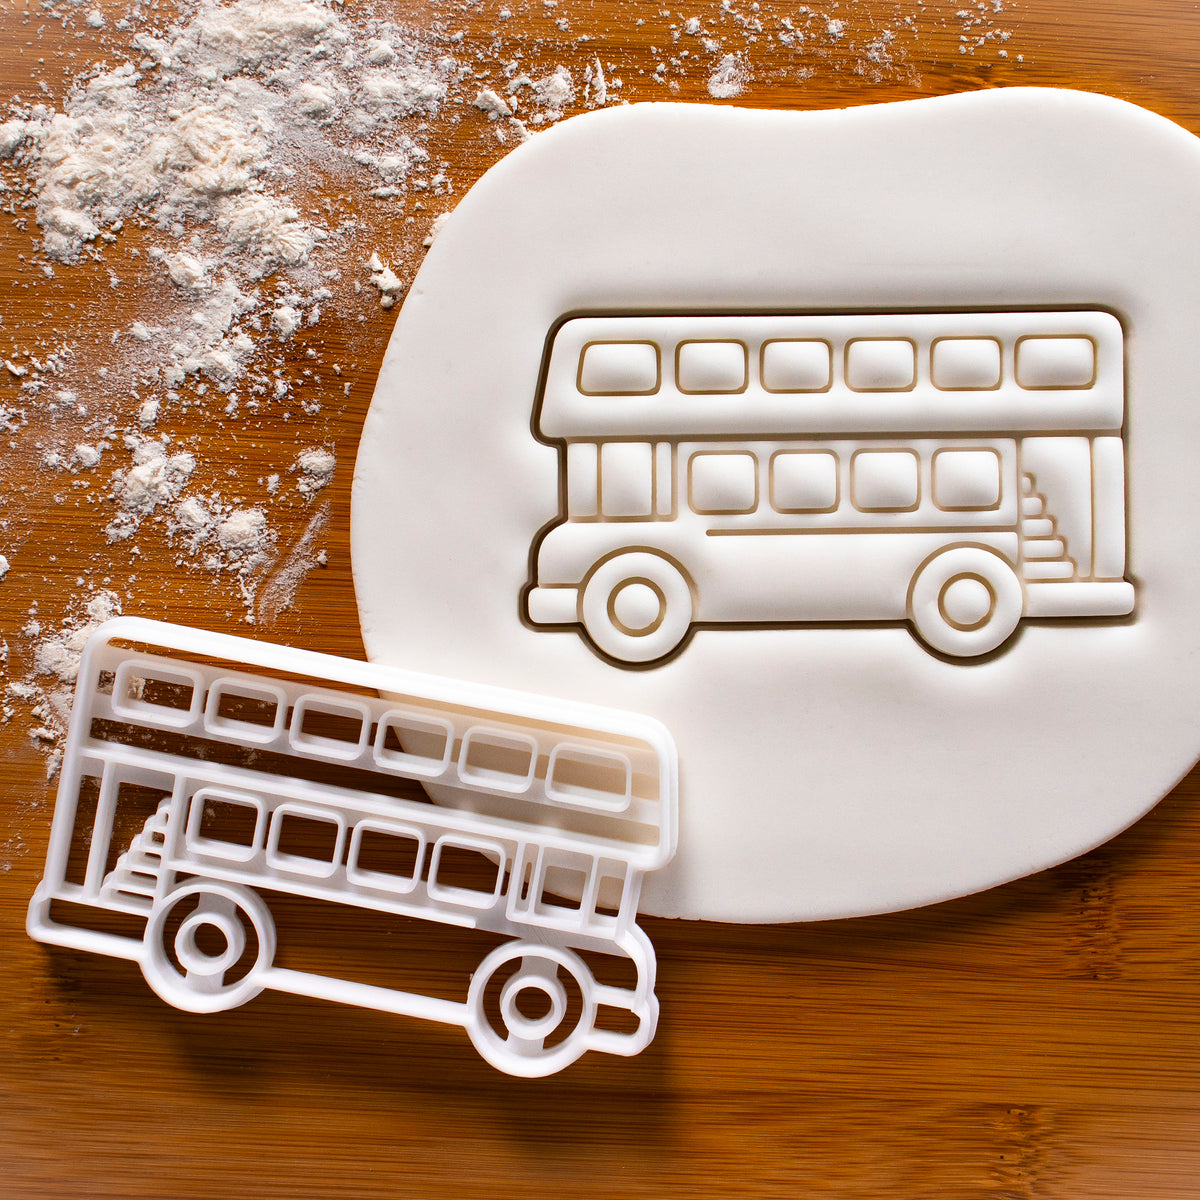 Double-Decker Bus Cookie Cutter